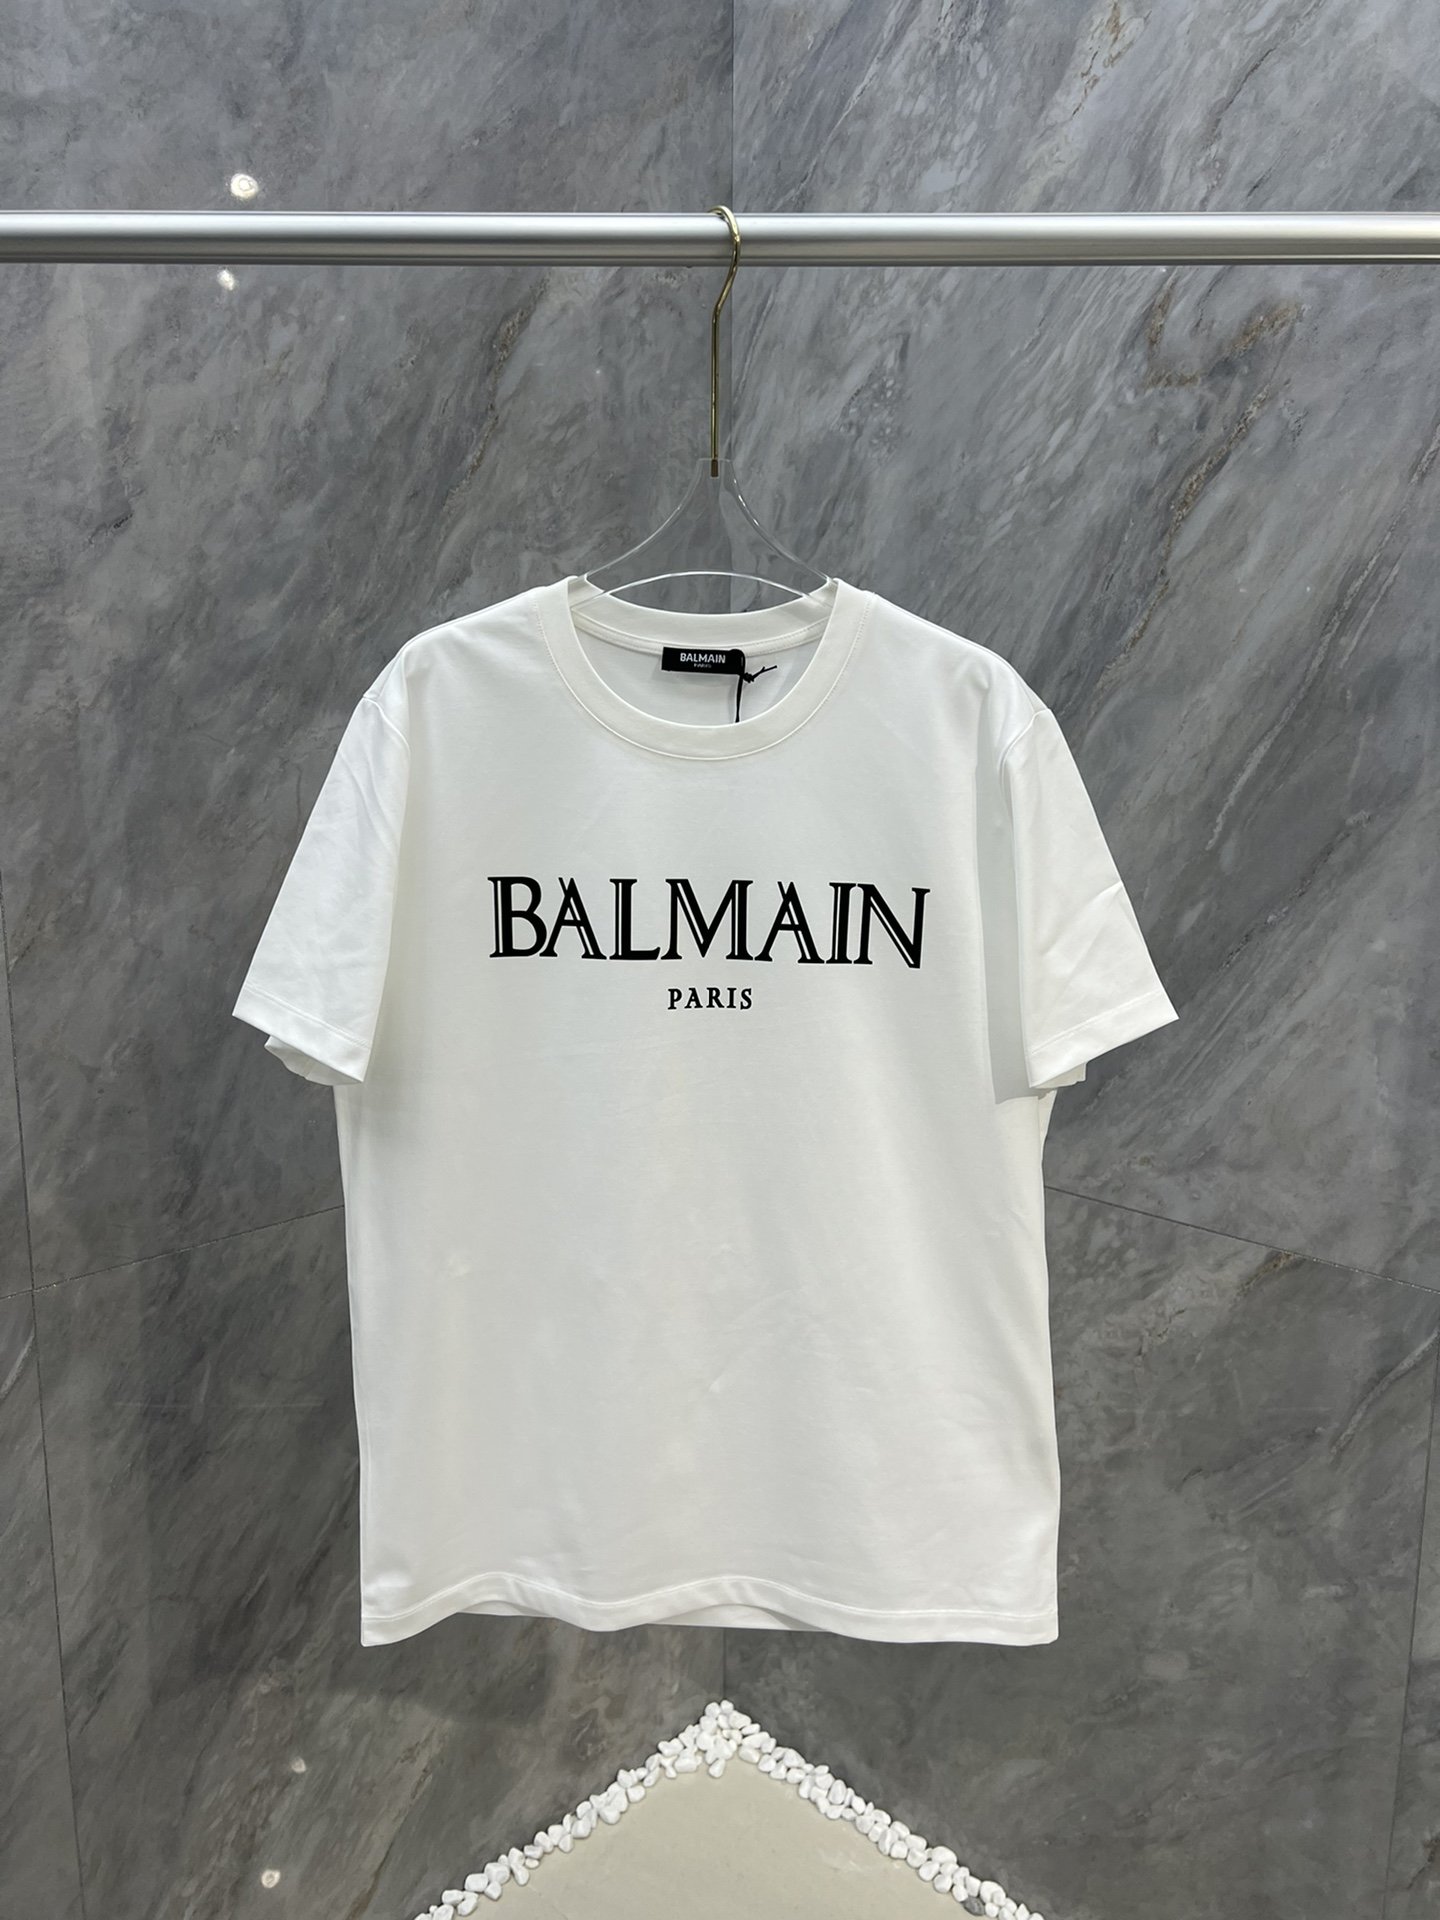 BALMAIN/巴尔曼新款字母印花圆领短袖T恤,演绎休闲的设计风格，优选特定bdeb支3股A00%棉质平纹针织面料制成，上身舒适度佳，衣橱的基础款臻品外穿内搭随意搭配；黑色 白色 S～XXXL